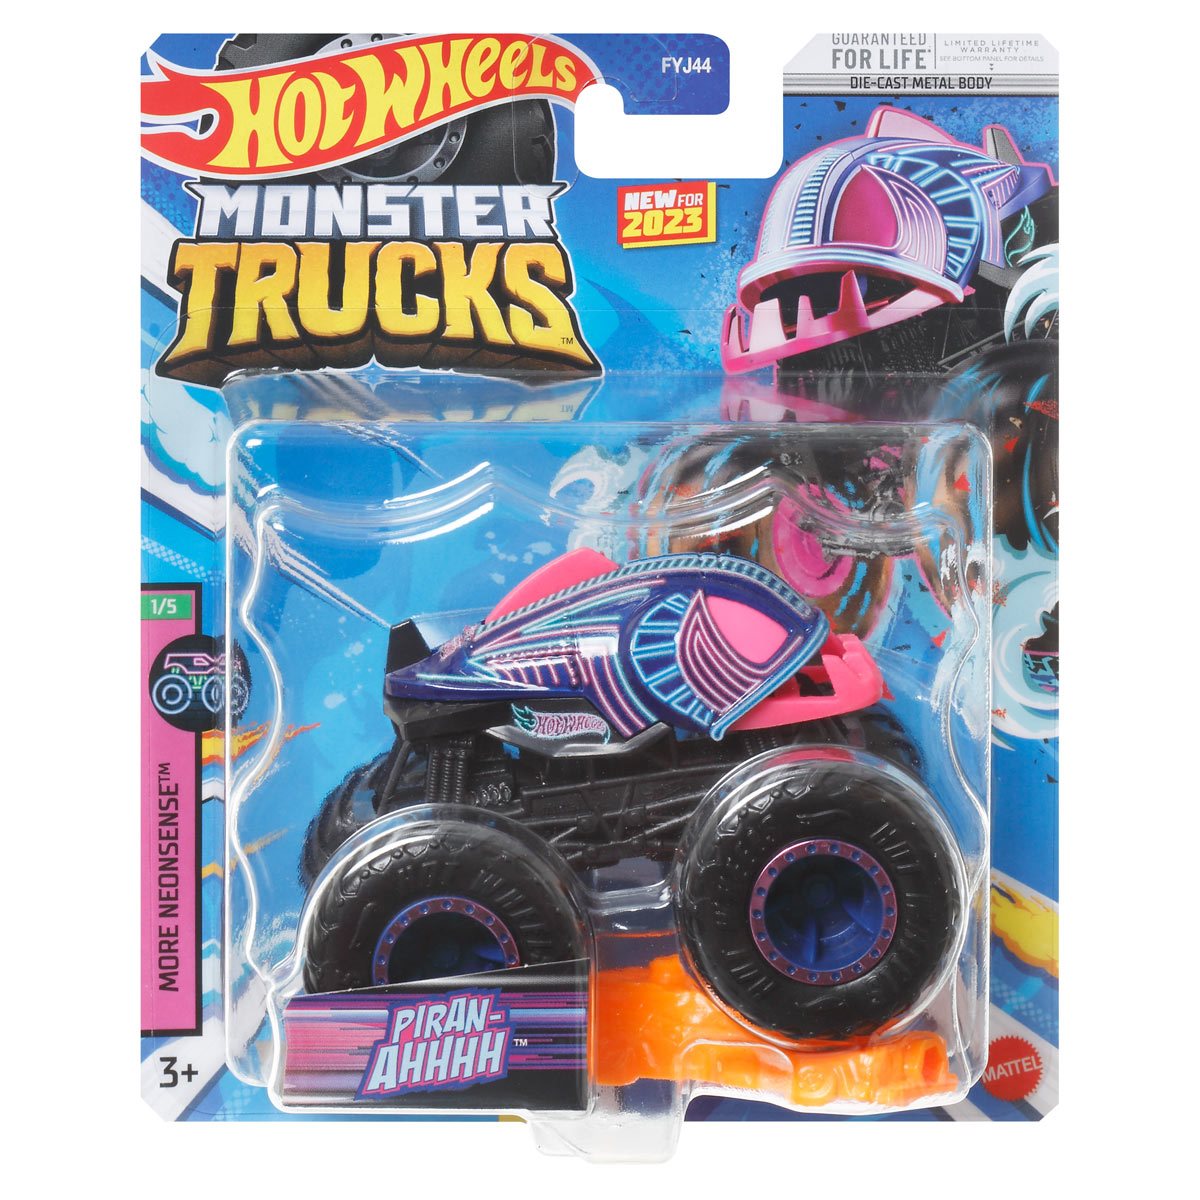 Wheels of monster 2 wheels Monster hot Trucks Mix 1:64 2023 8, Vehicle Hot Case Scale truck